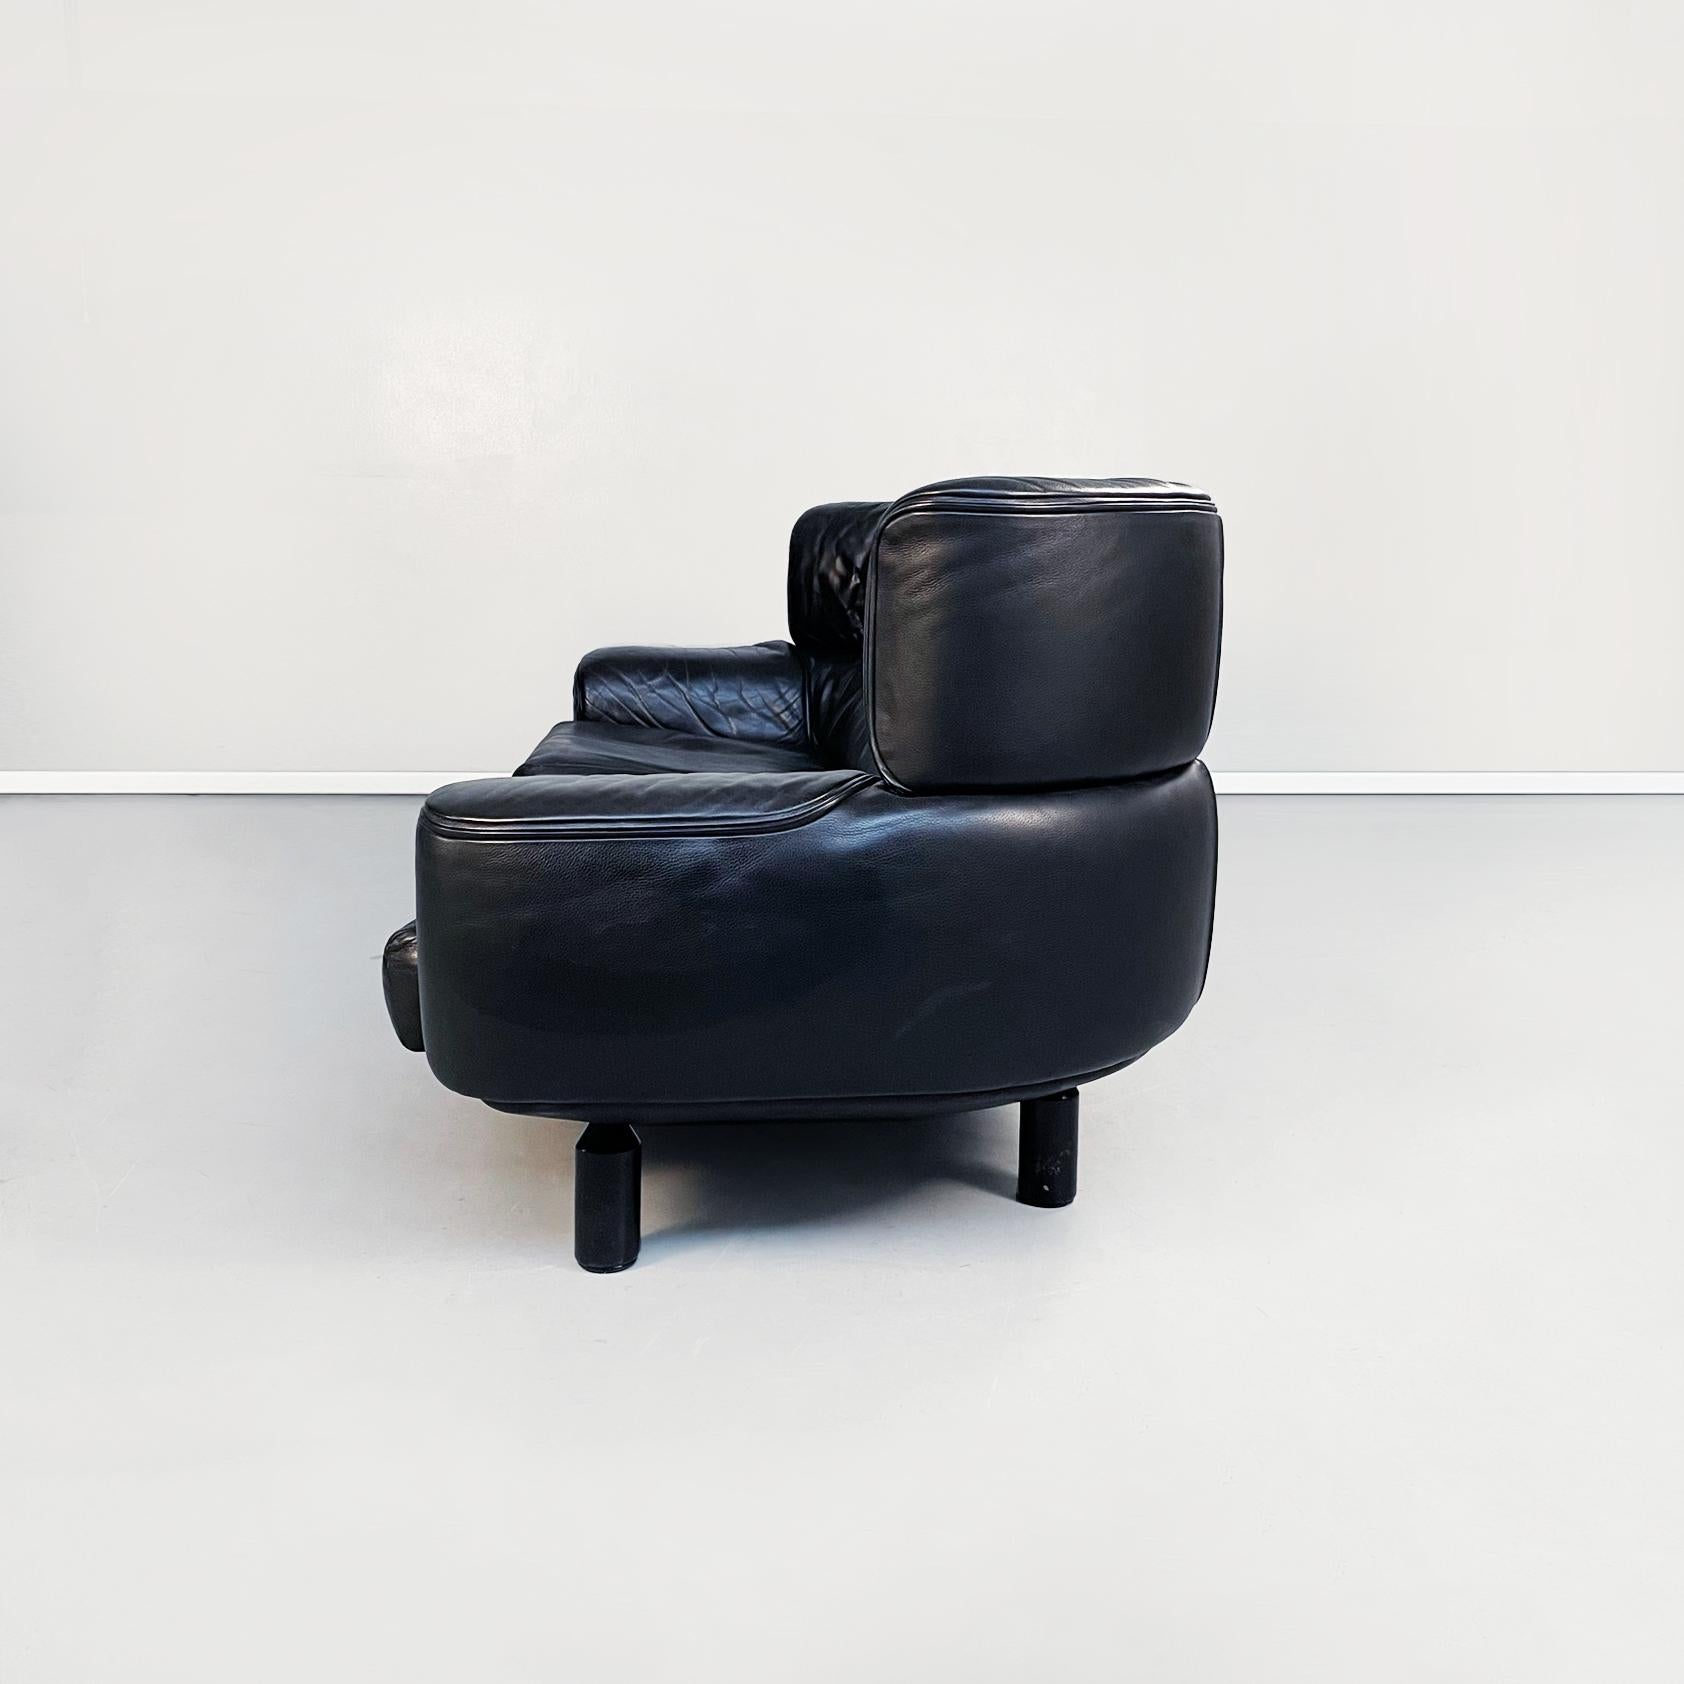 Mid-Century Modern Italian Modern Black Leather Sofas and Armchair Bull by Frattini Cassina, 1980s